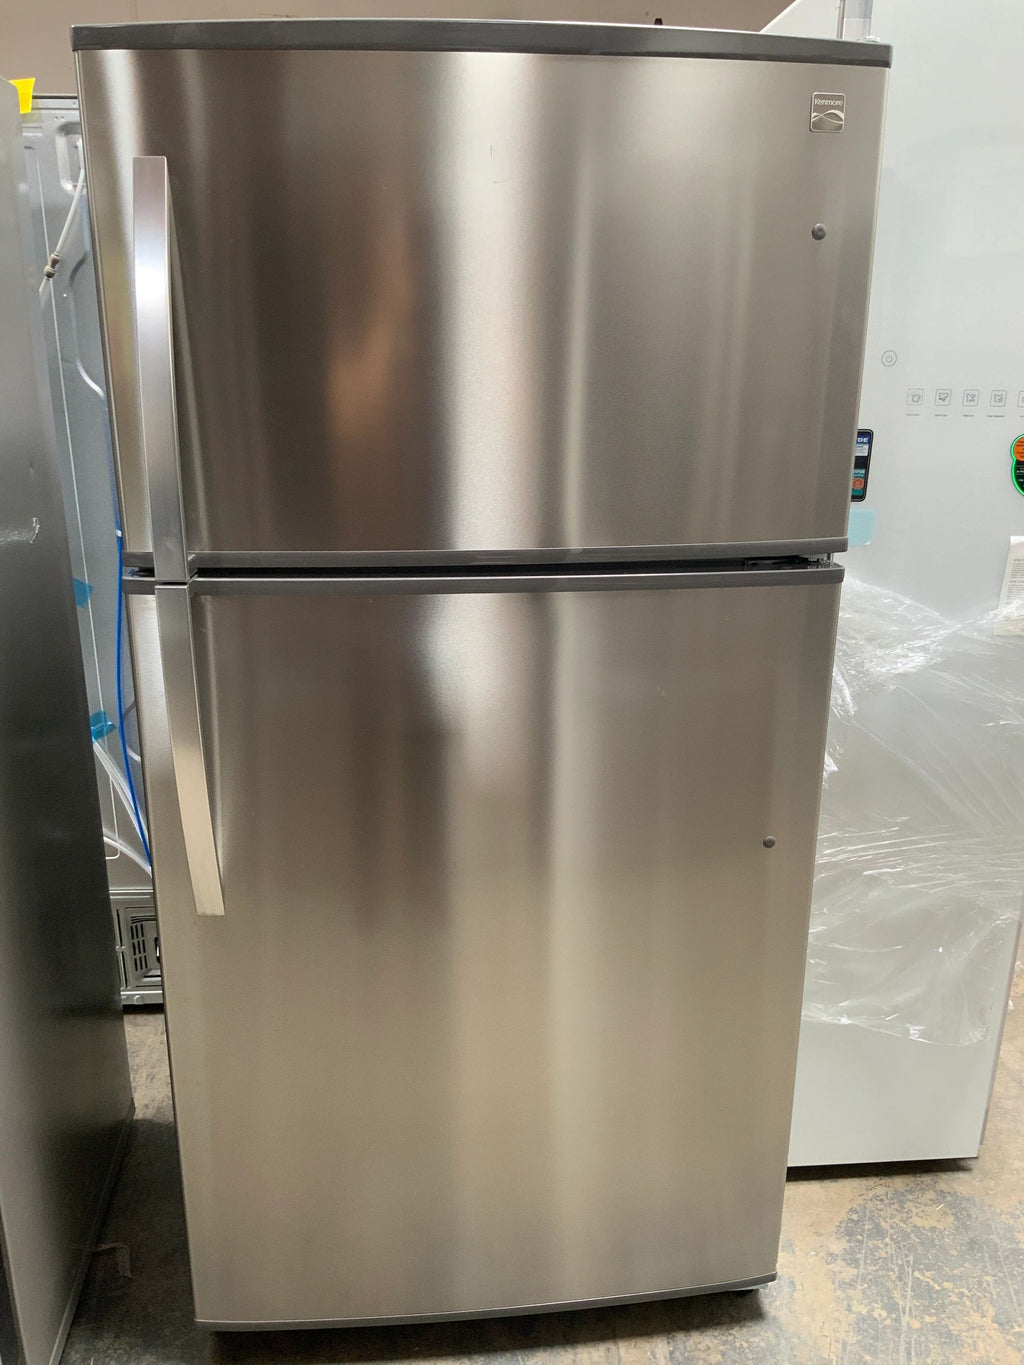 New Open Box. Kenmore 61205 21 cu. ft. Top-Freezer Refrigerator - Stainless Steel. Model: 61205